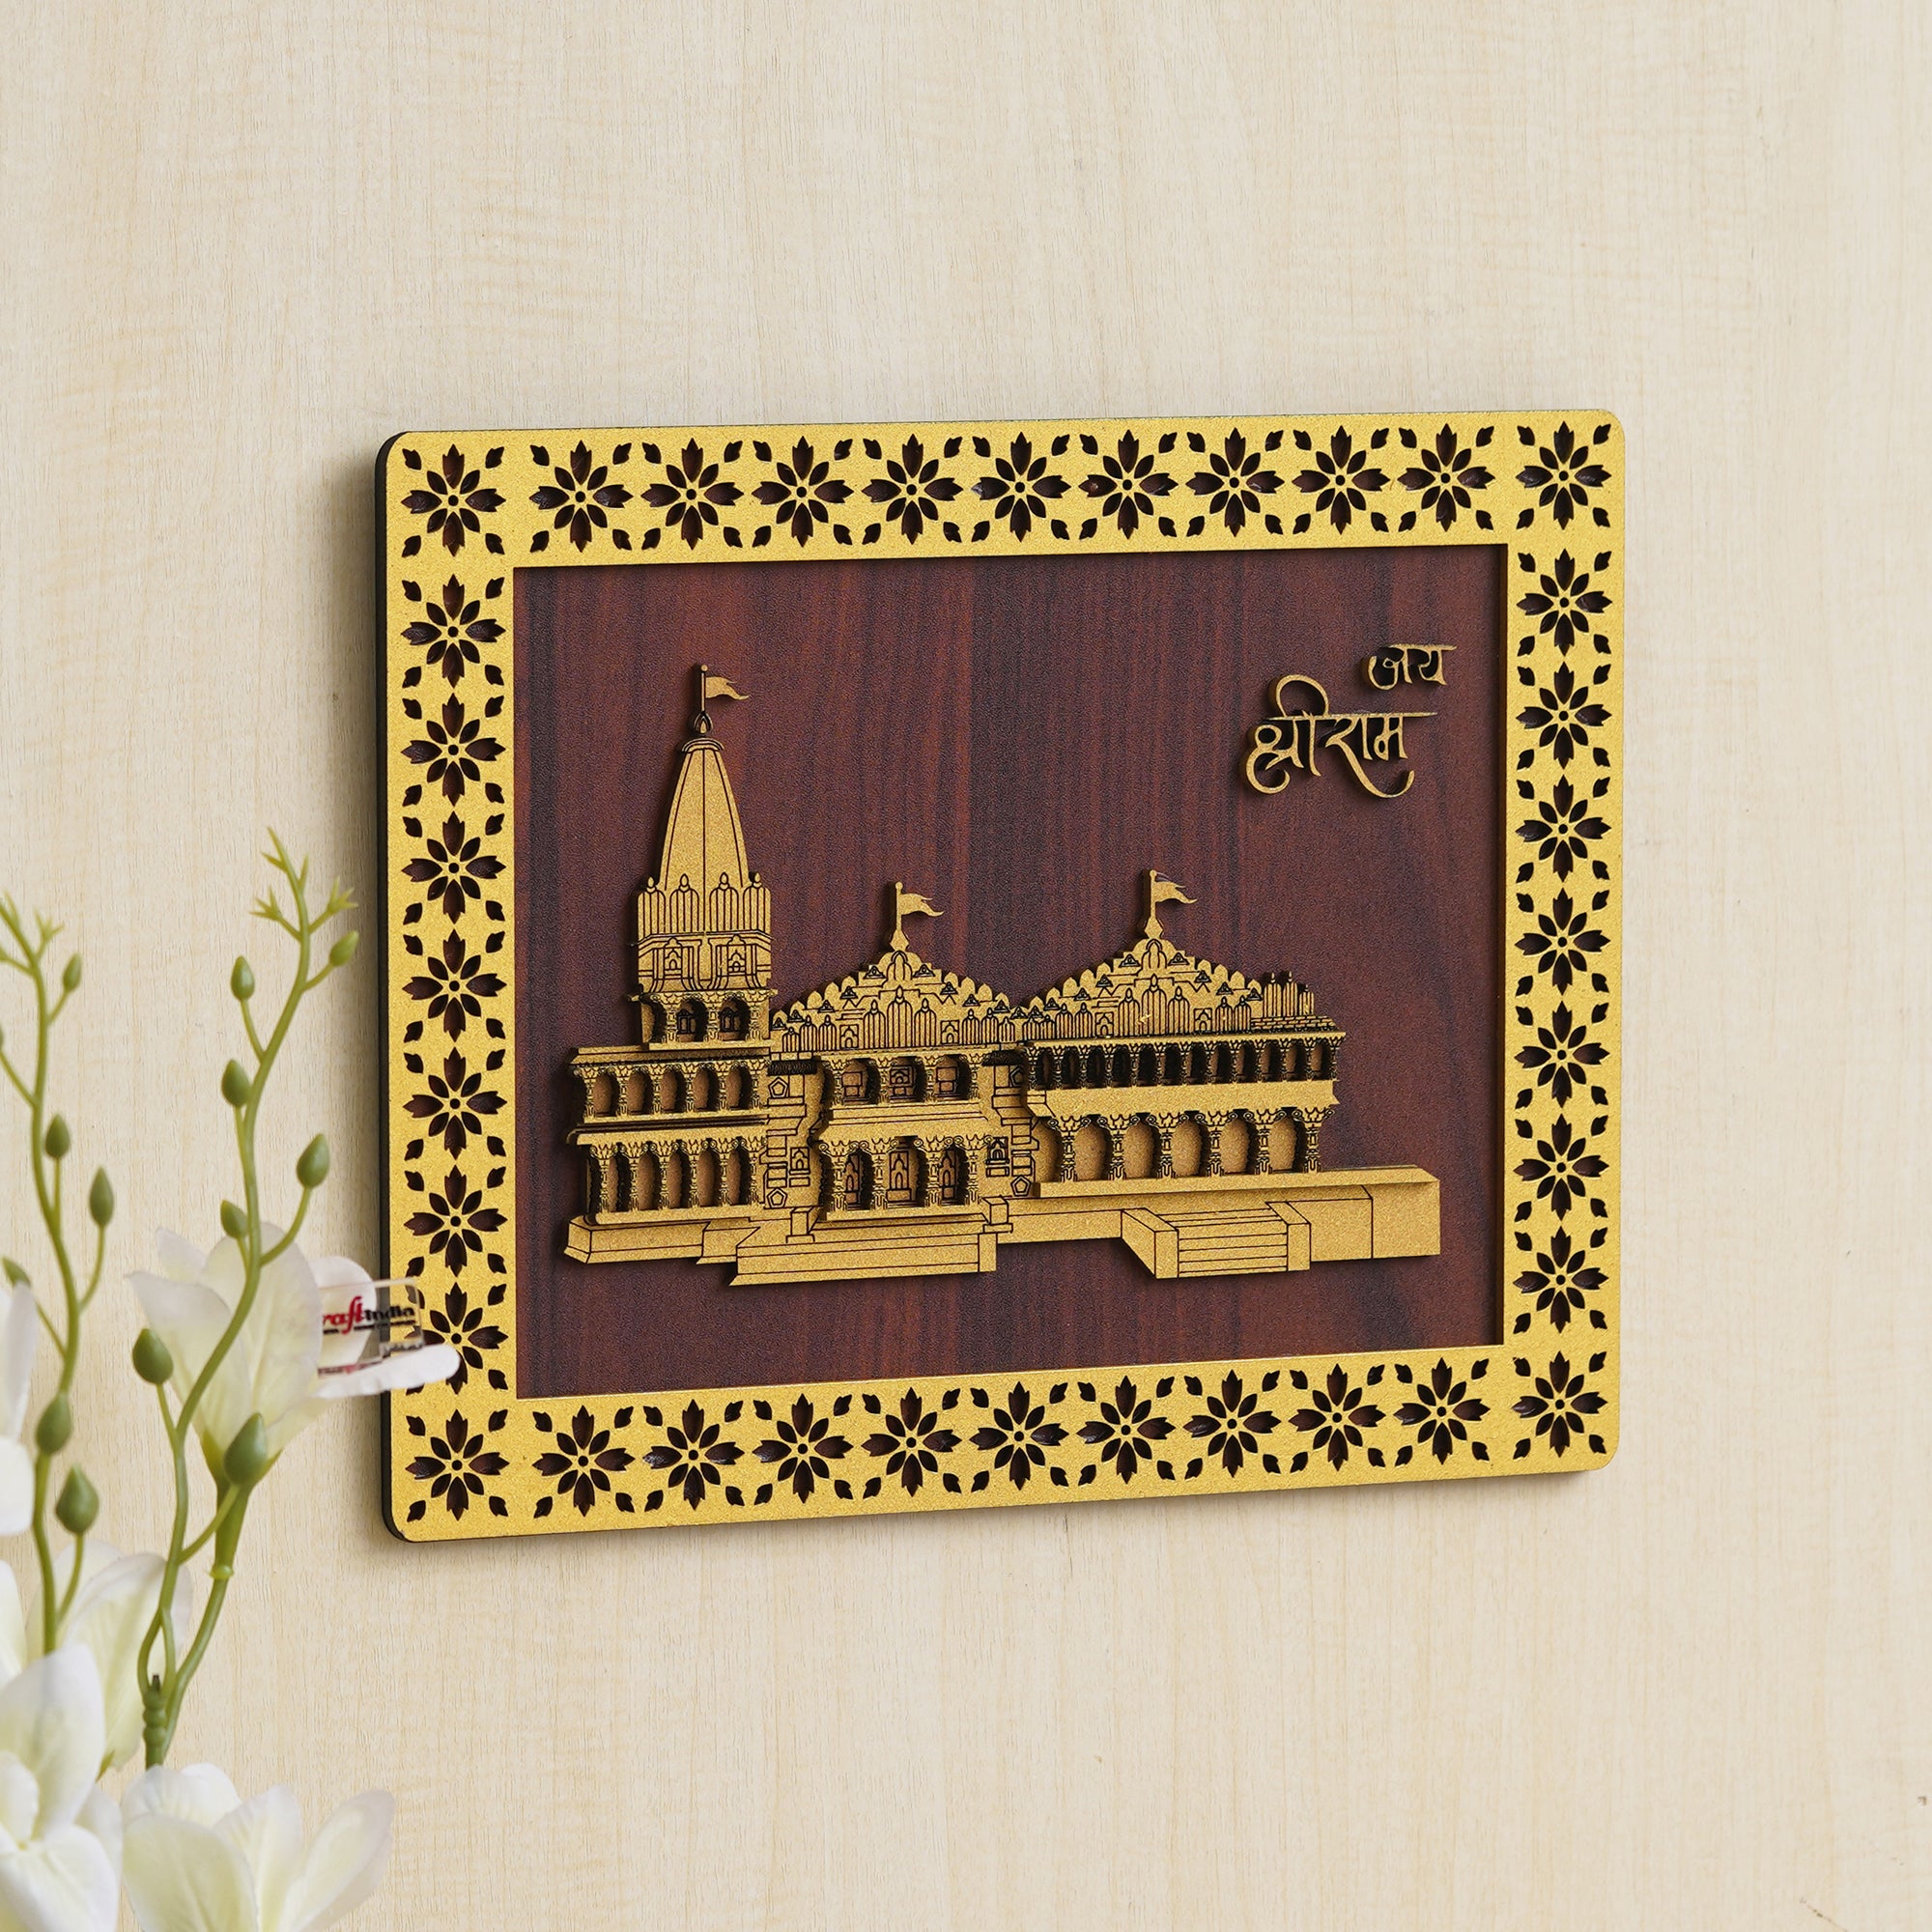 eCraftIndia Jai Shri Ram Mandir Ayodhya Decorative Wooden Frame - Religious Wall Hanging Showpiece for Home Decor, and Spiritual Gifting (Gold, Brown)